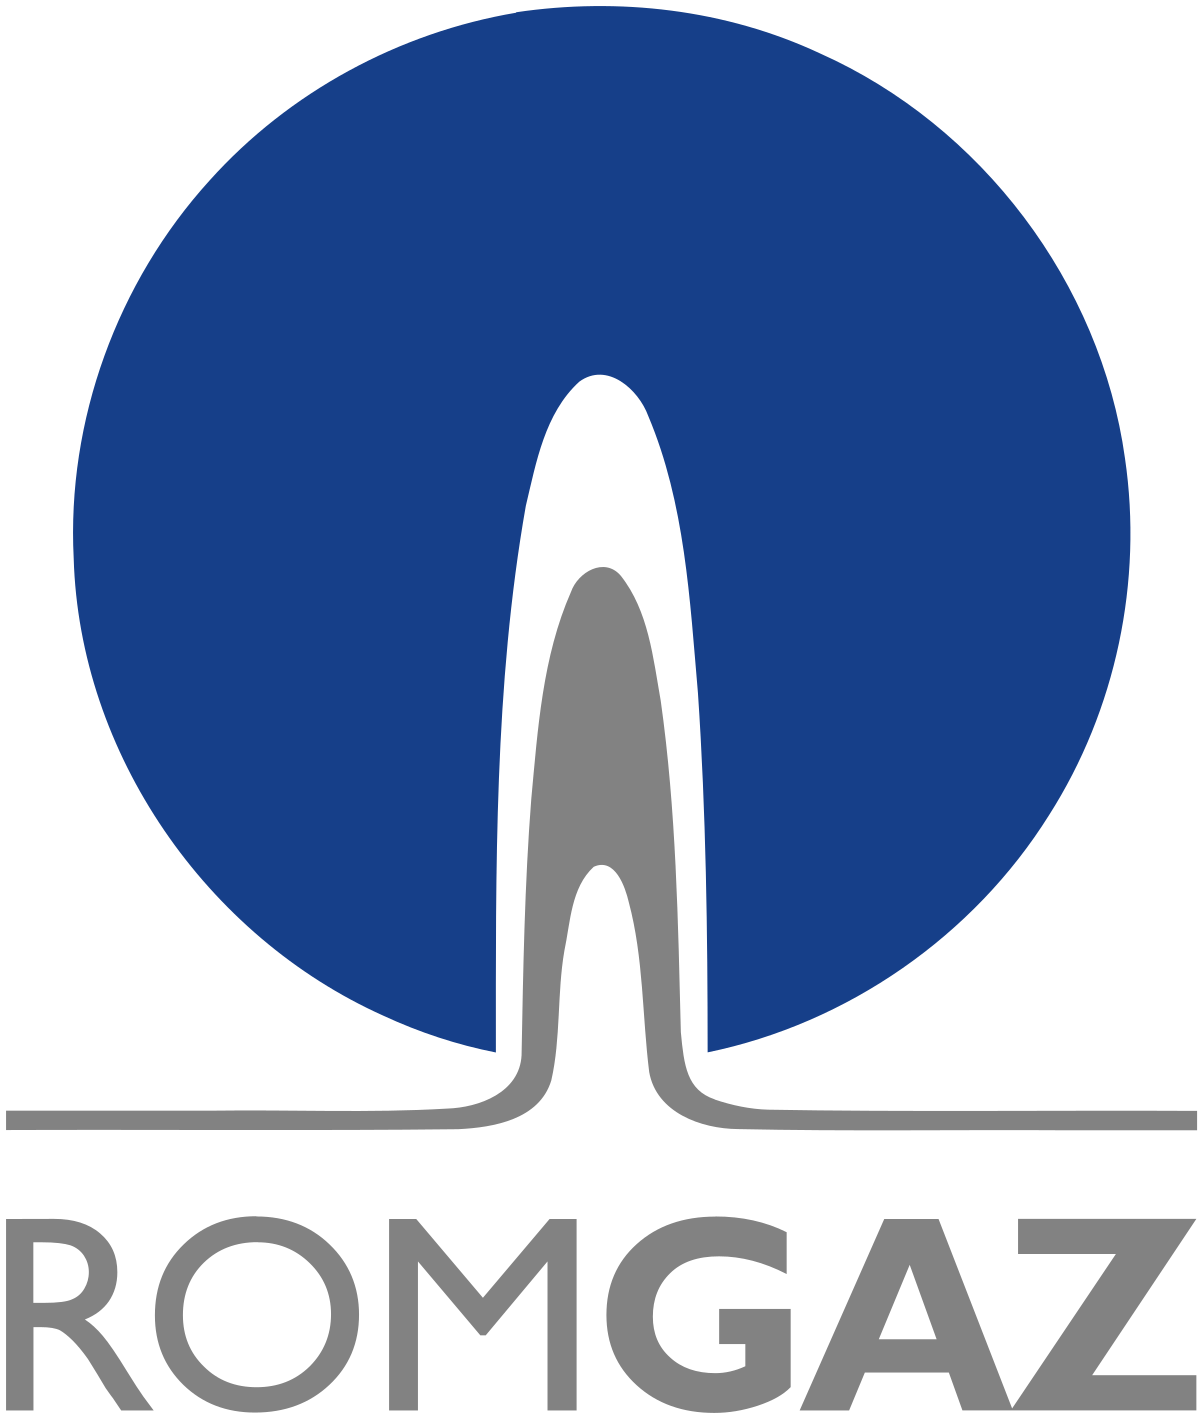 Romgaz Brand Logo